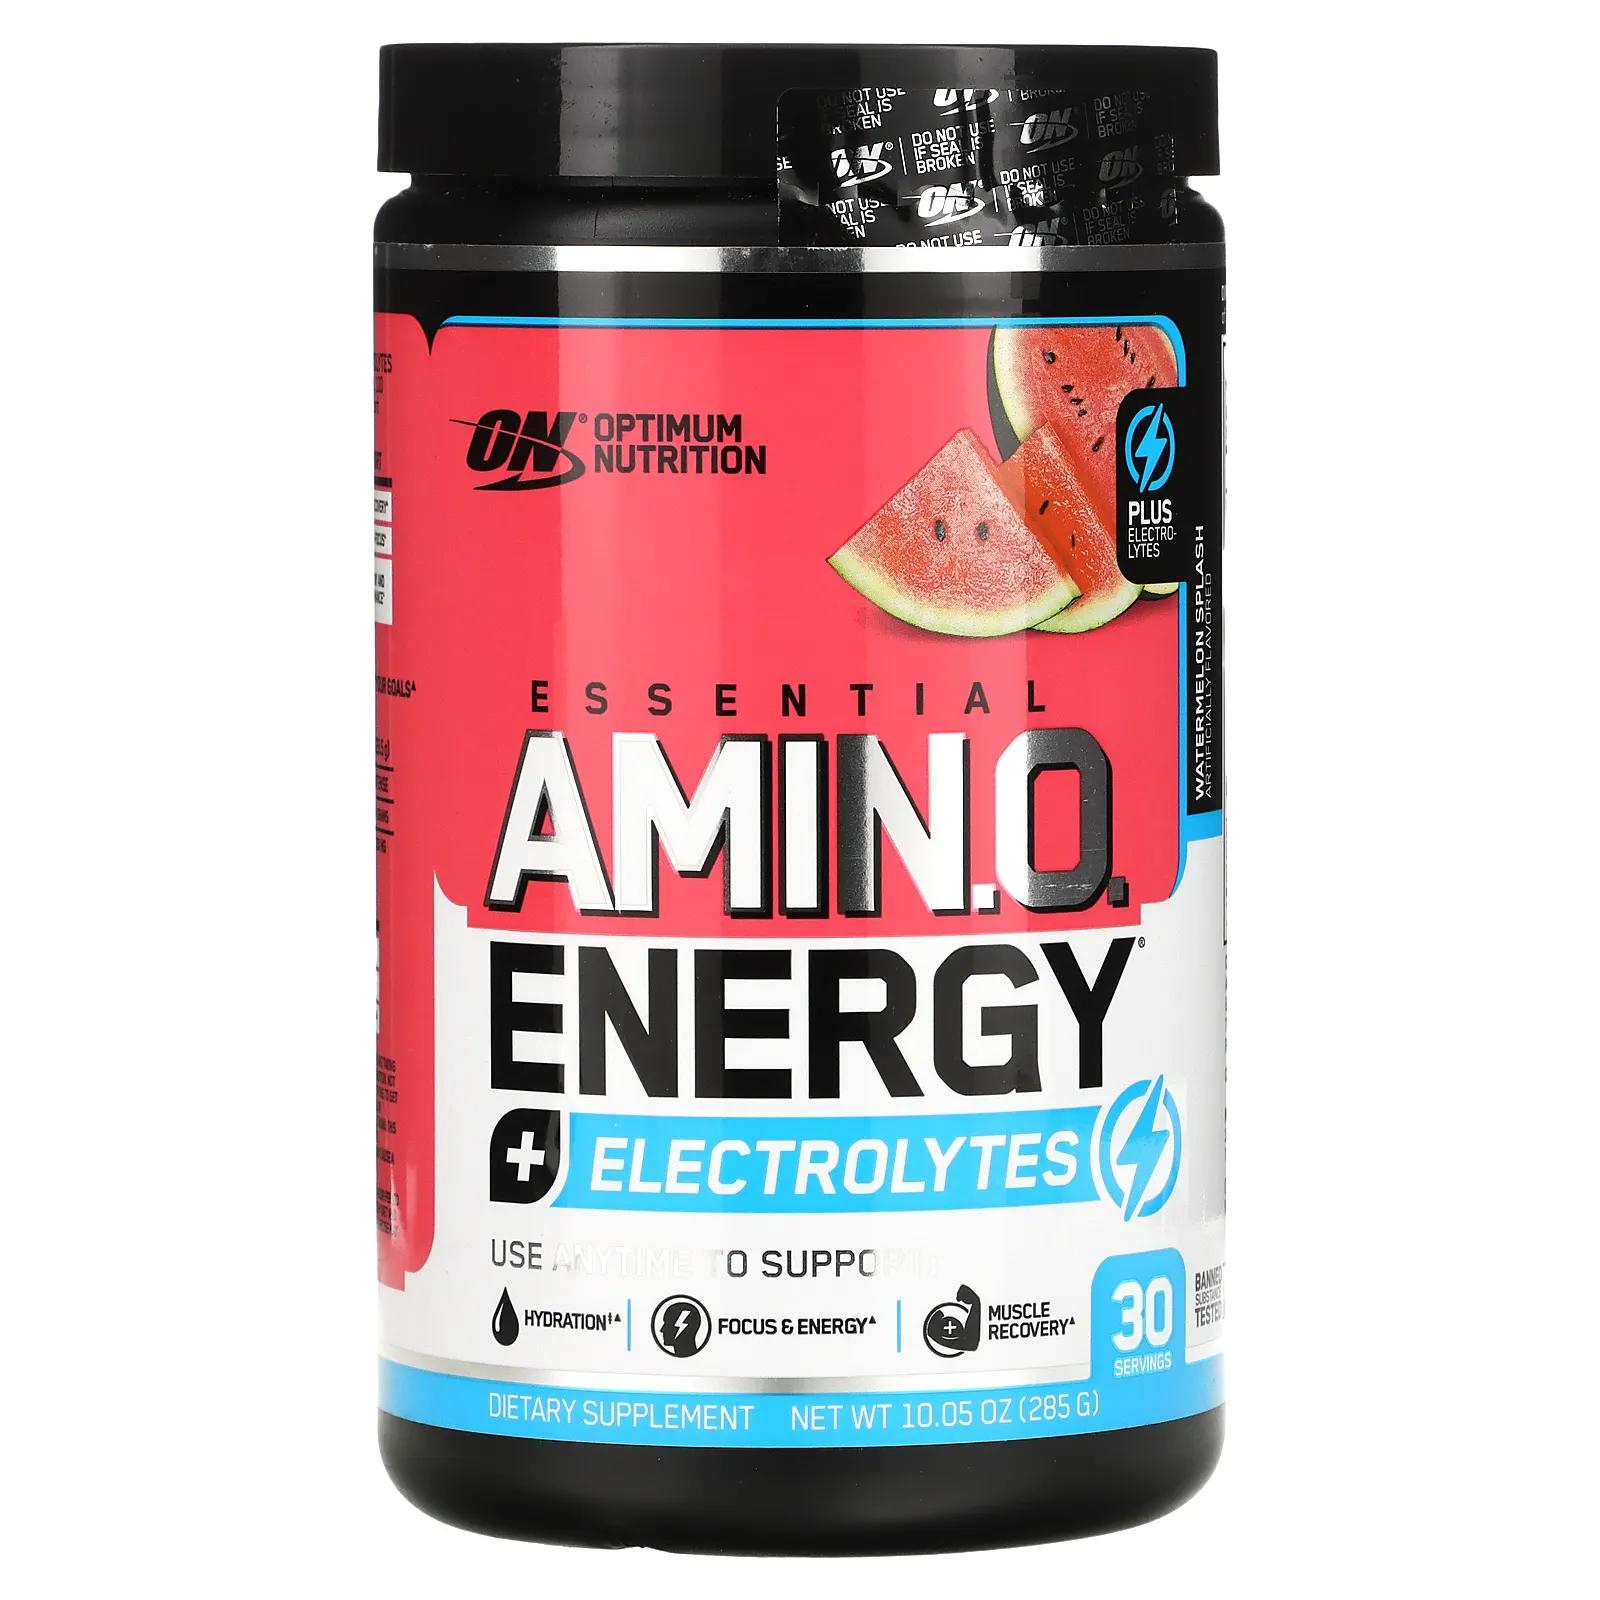 Optimum Nutrition Essential Amino Energy + электролиты арбузный взрыв 10,05 унц. (285 г)